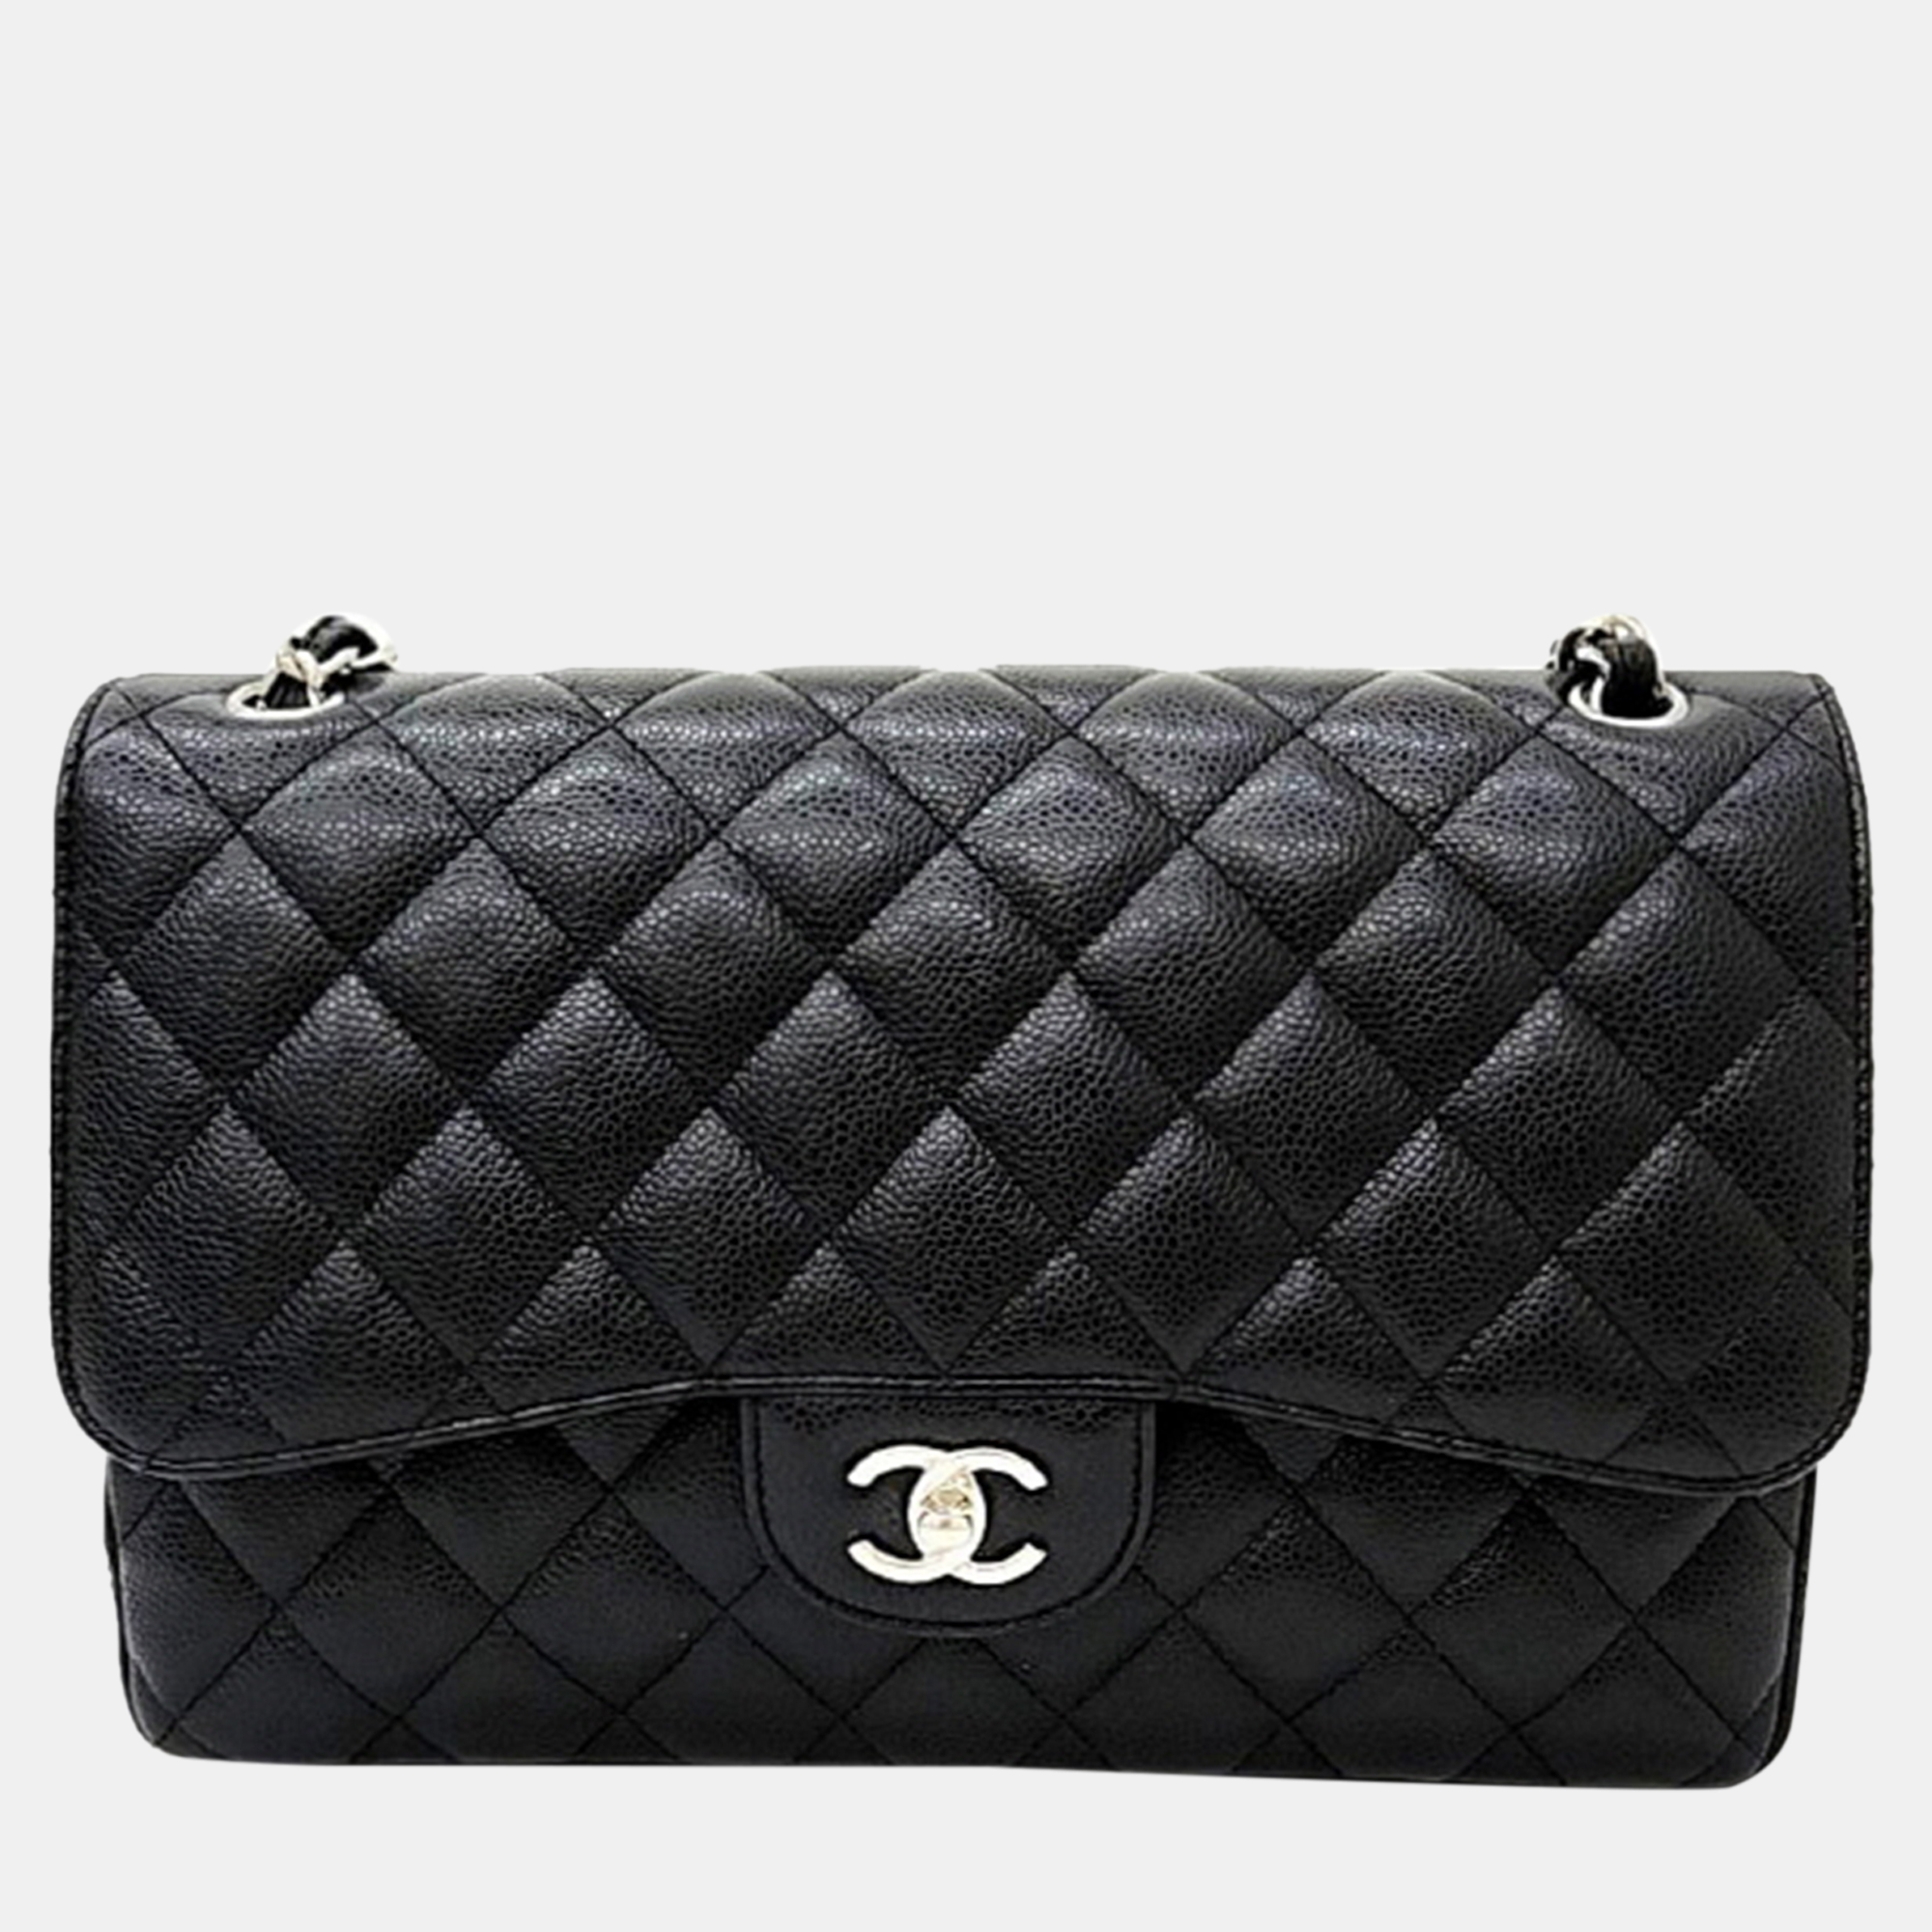 Chanel caviar classic jumbo bag